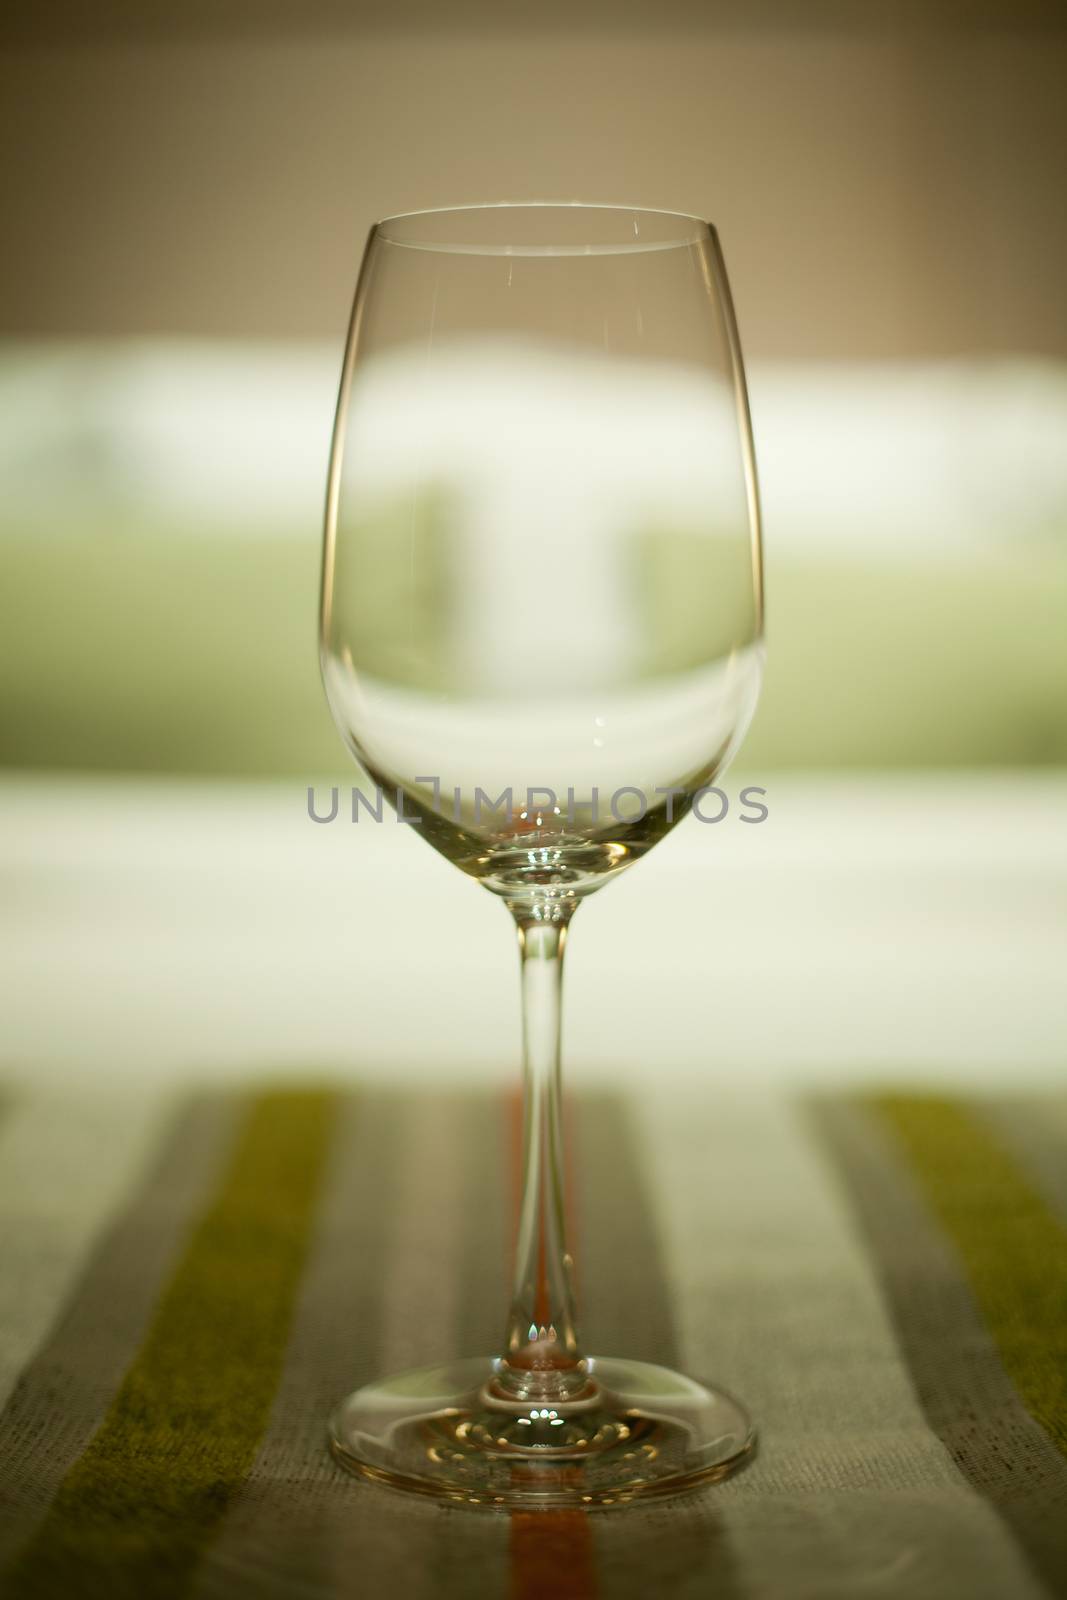 Wine glasses in luxury hotel interior